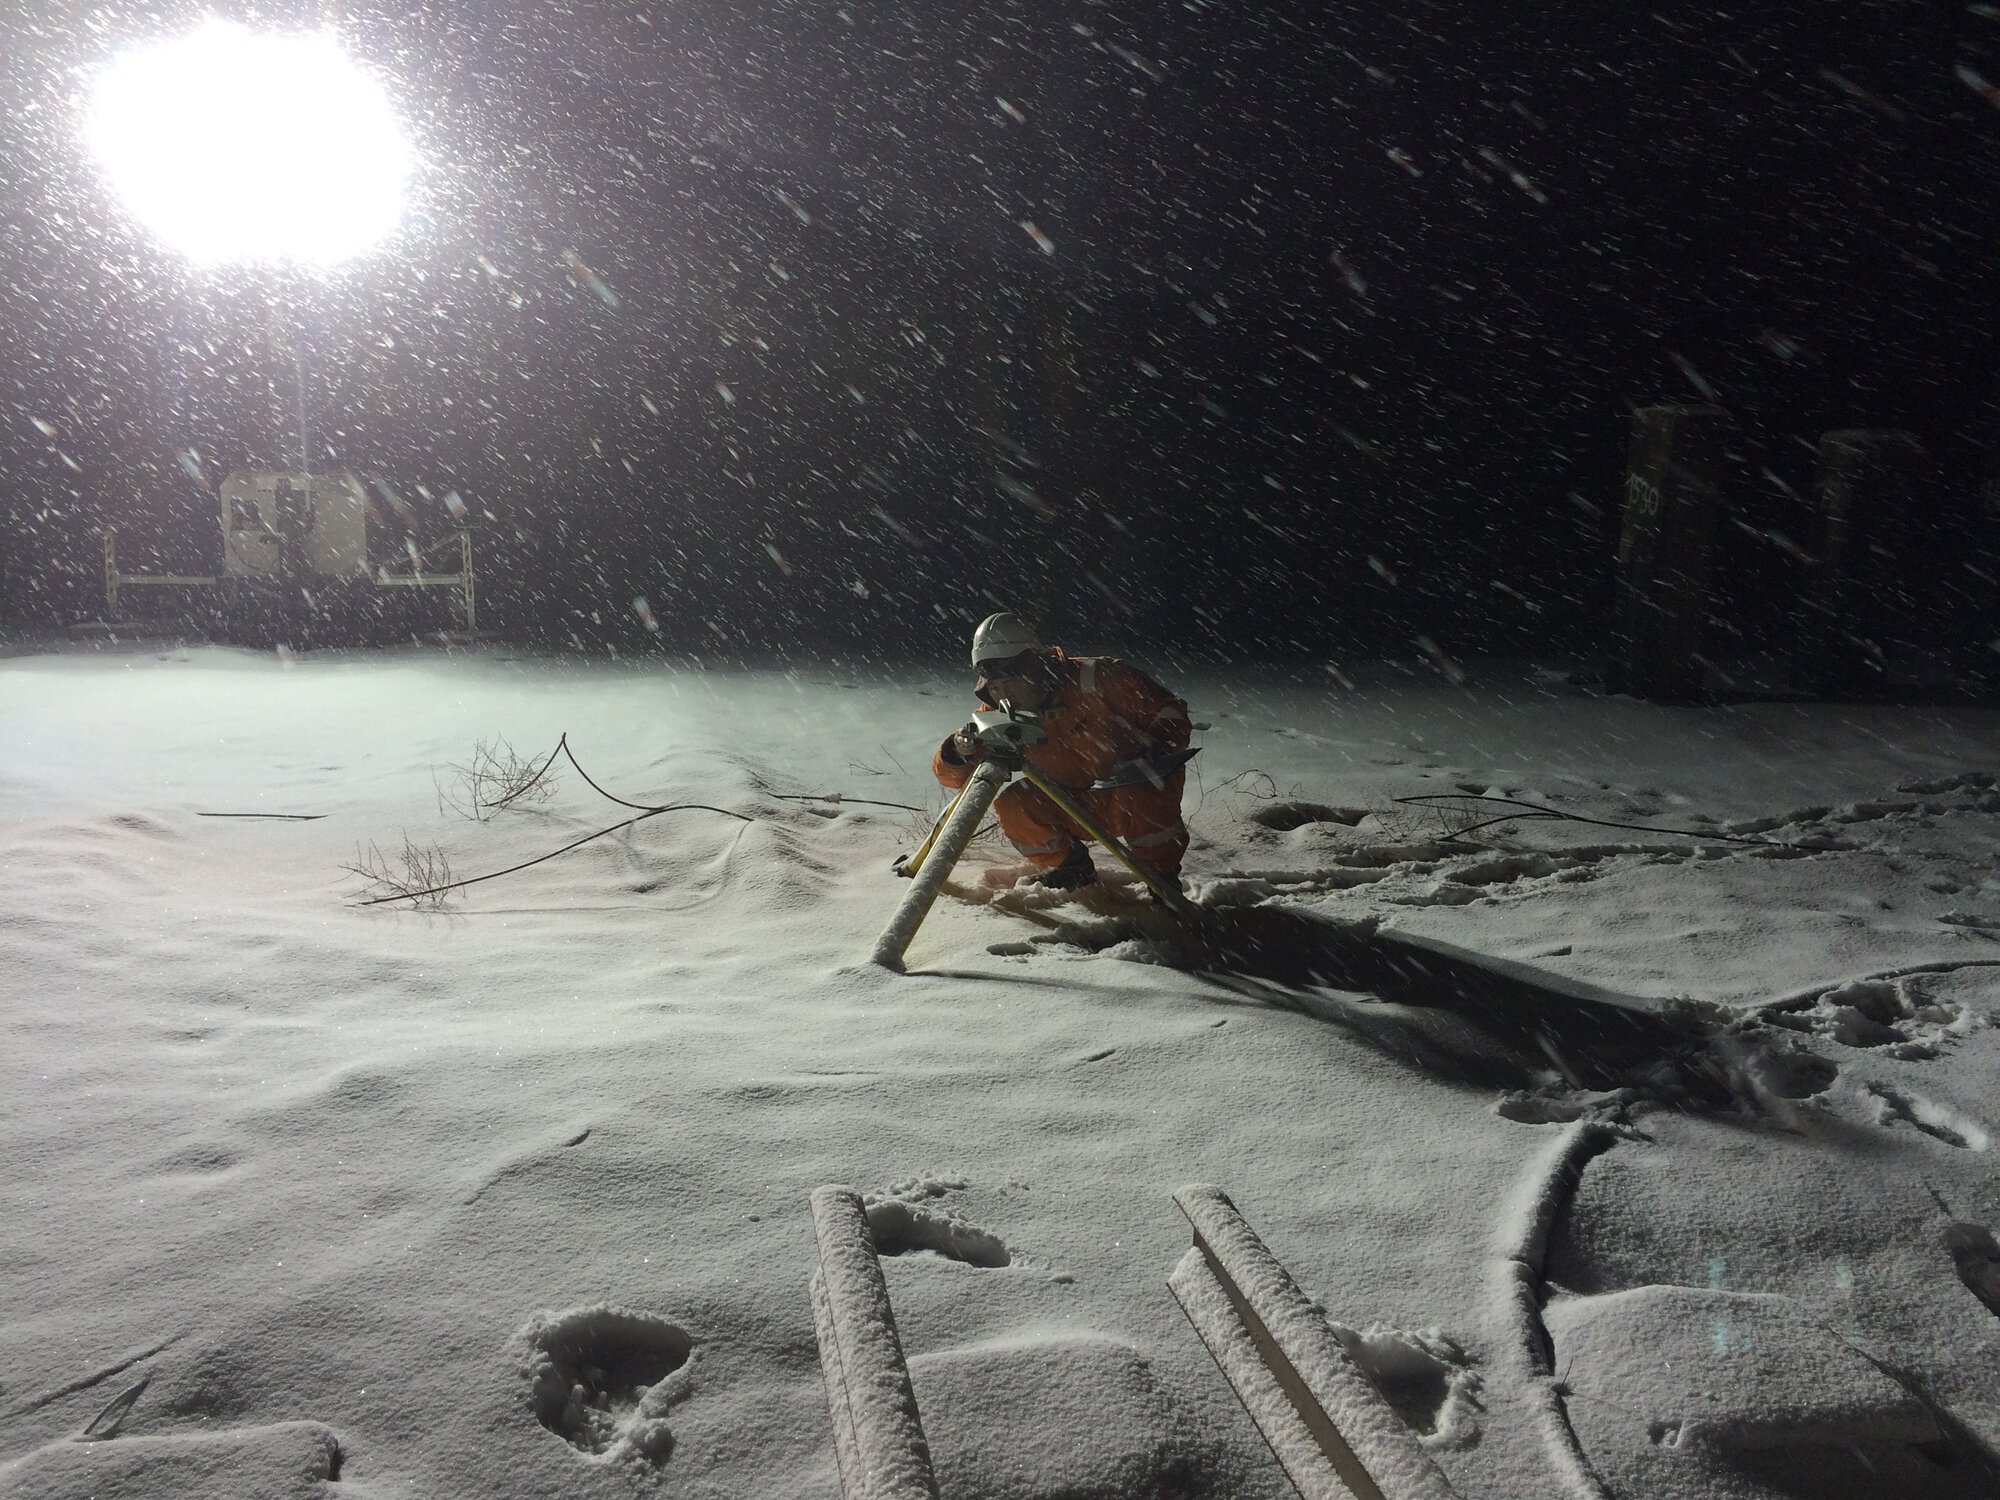 Survey during a snowstorm while performing pile testing, Tengiz oilfield, Kazakhstan.
IMG_1258